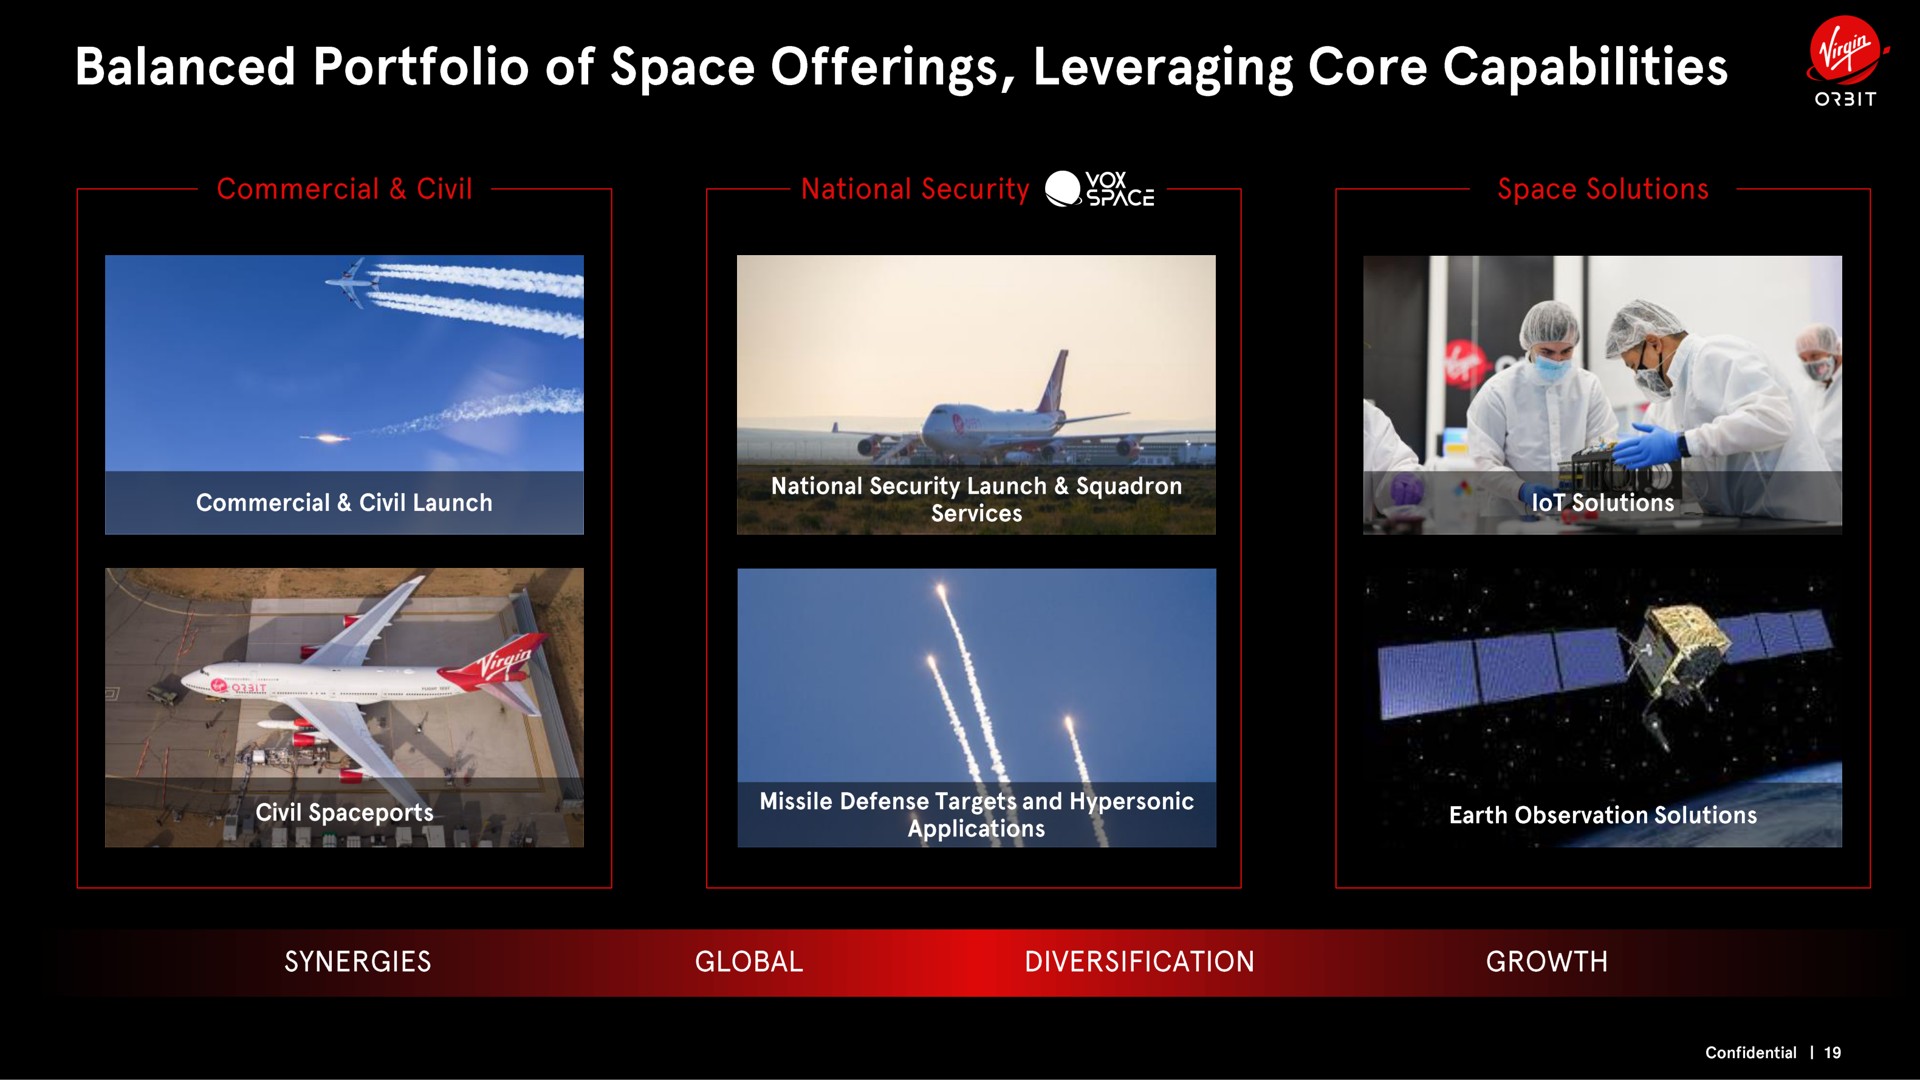 a balanced portfolio of space offerings leveraging core capabilities | Virgin Orbit